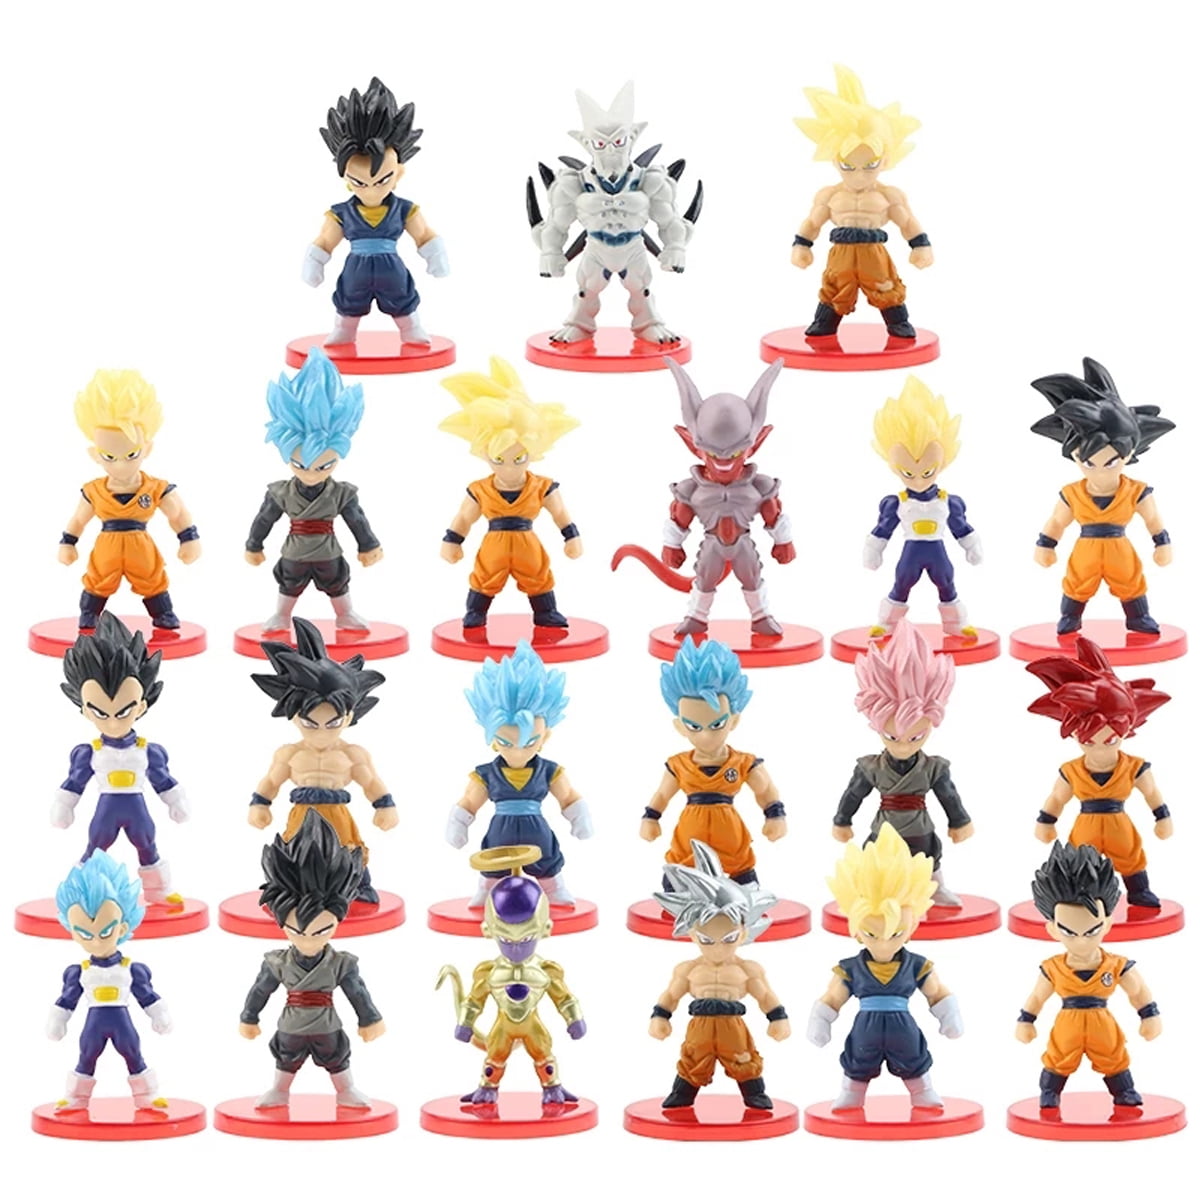 Dragon Ball Z Figures Lot of 21pcs Super Saiyan Action Figure Toys Set Kids Gift 